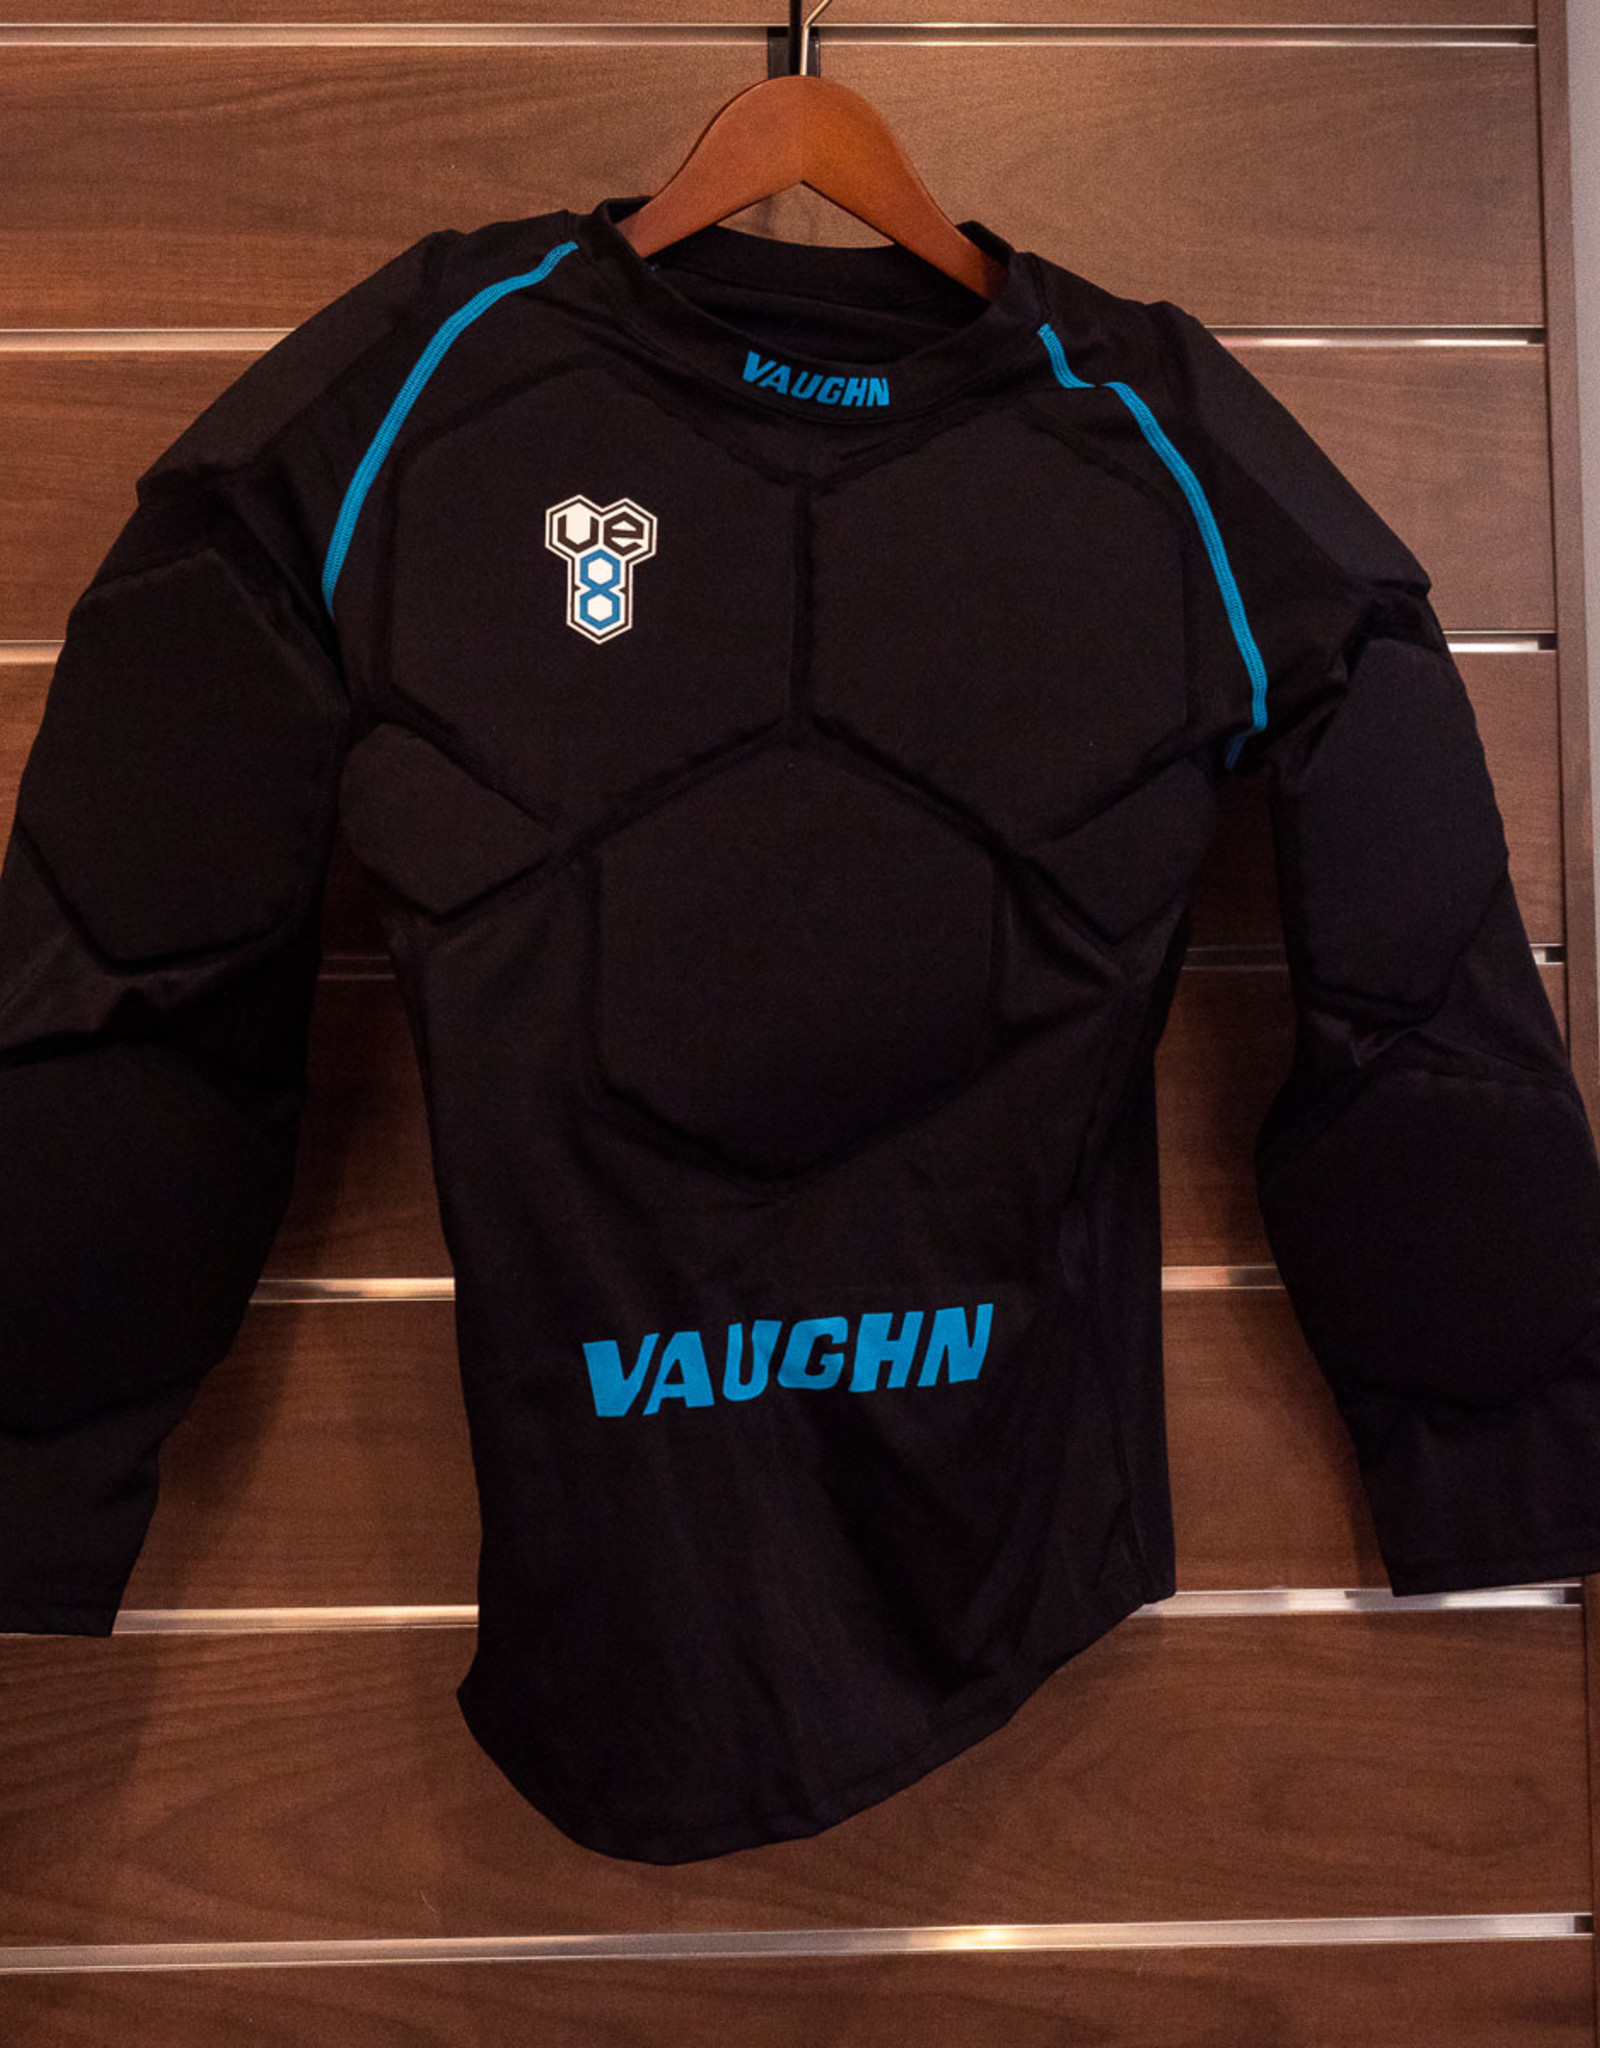 Vaughn Vaughn VE8 Padded Compression Shirt - LG